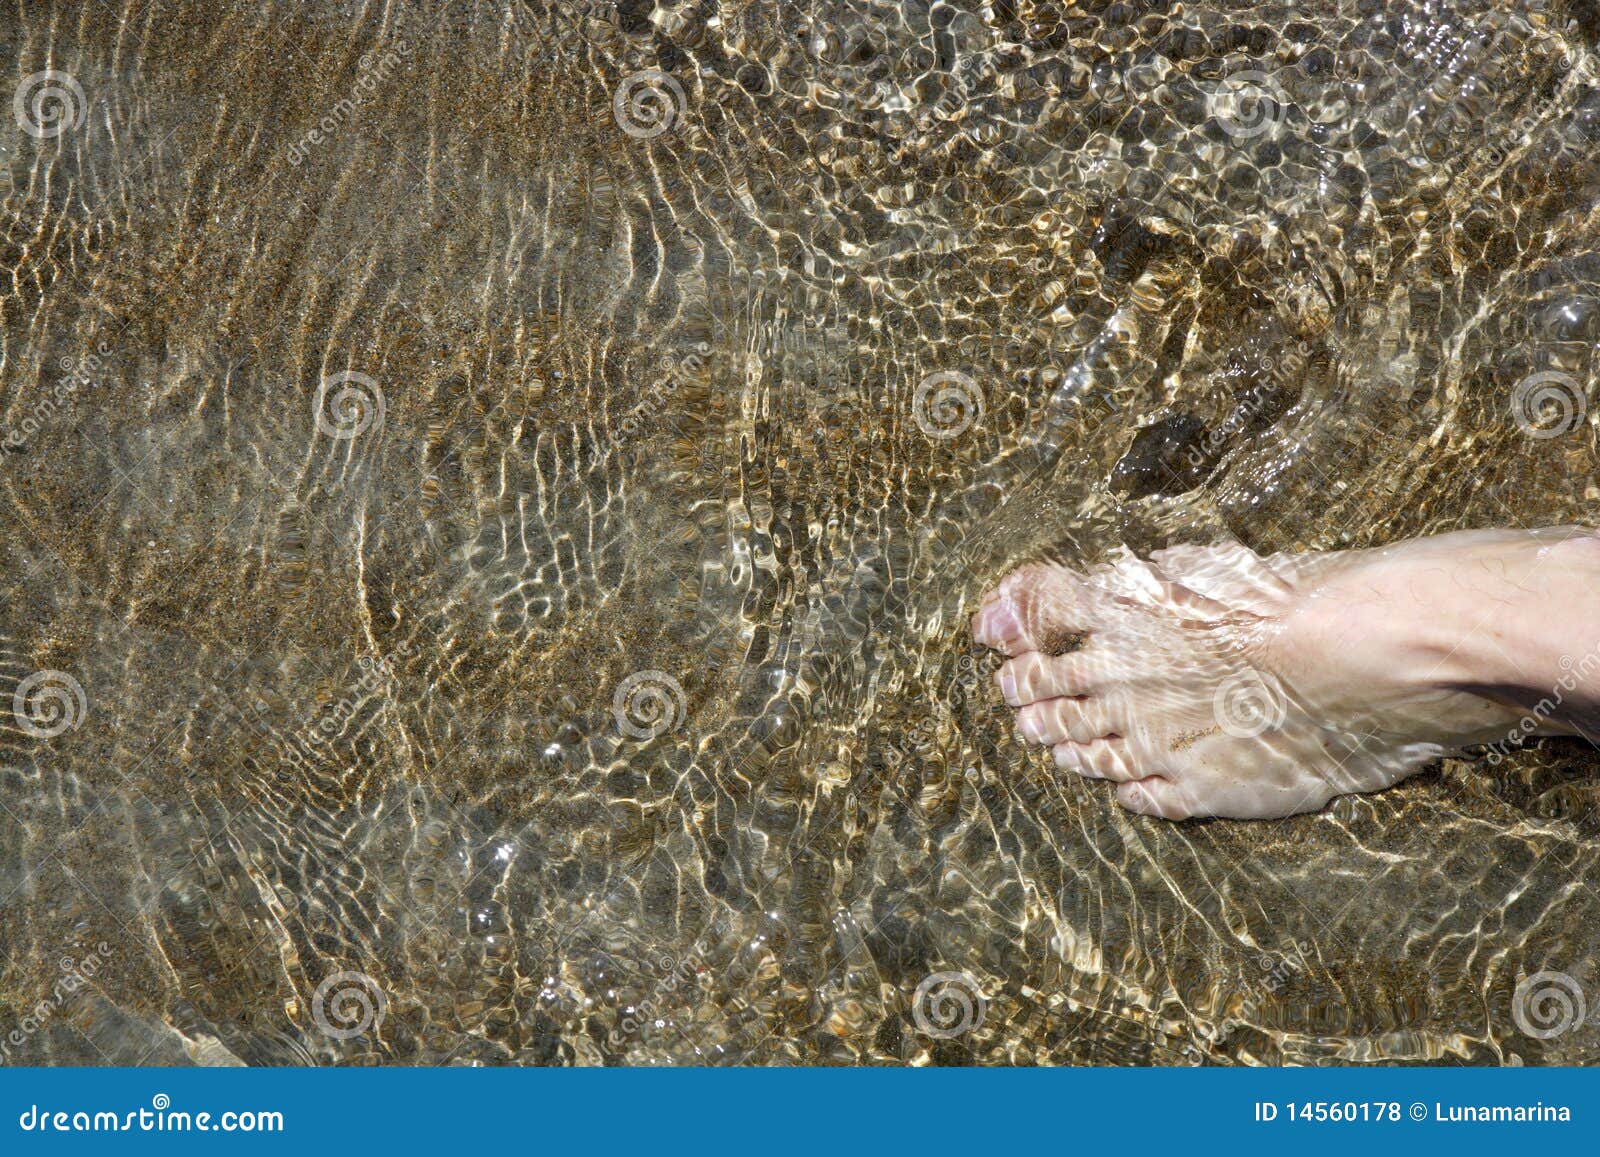 beach tourist feet walking on shore shallow water